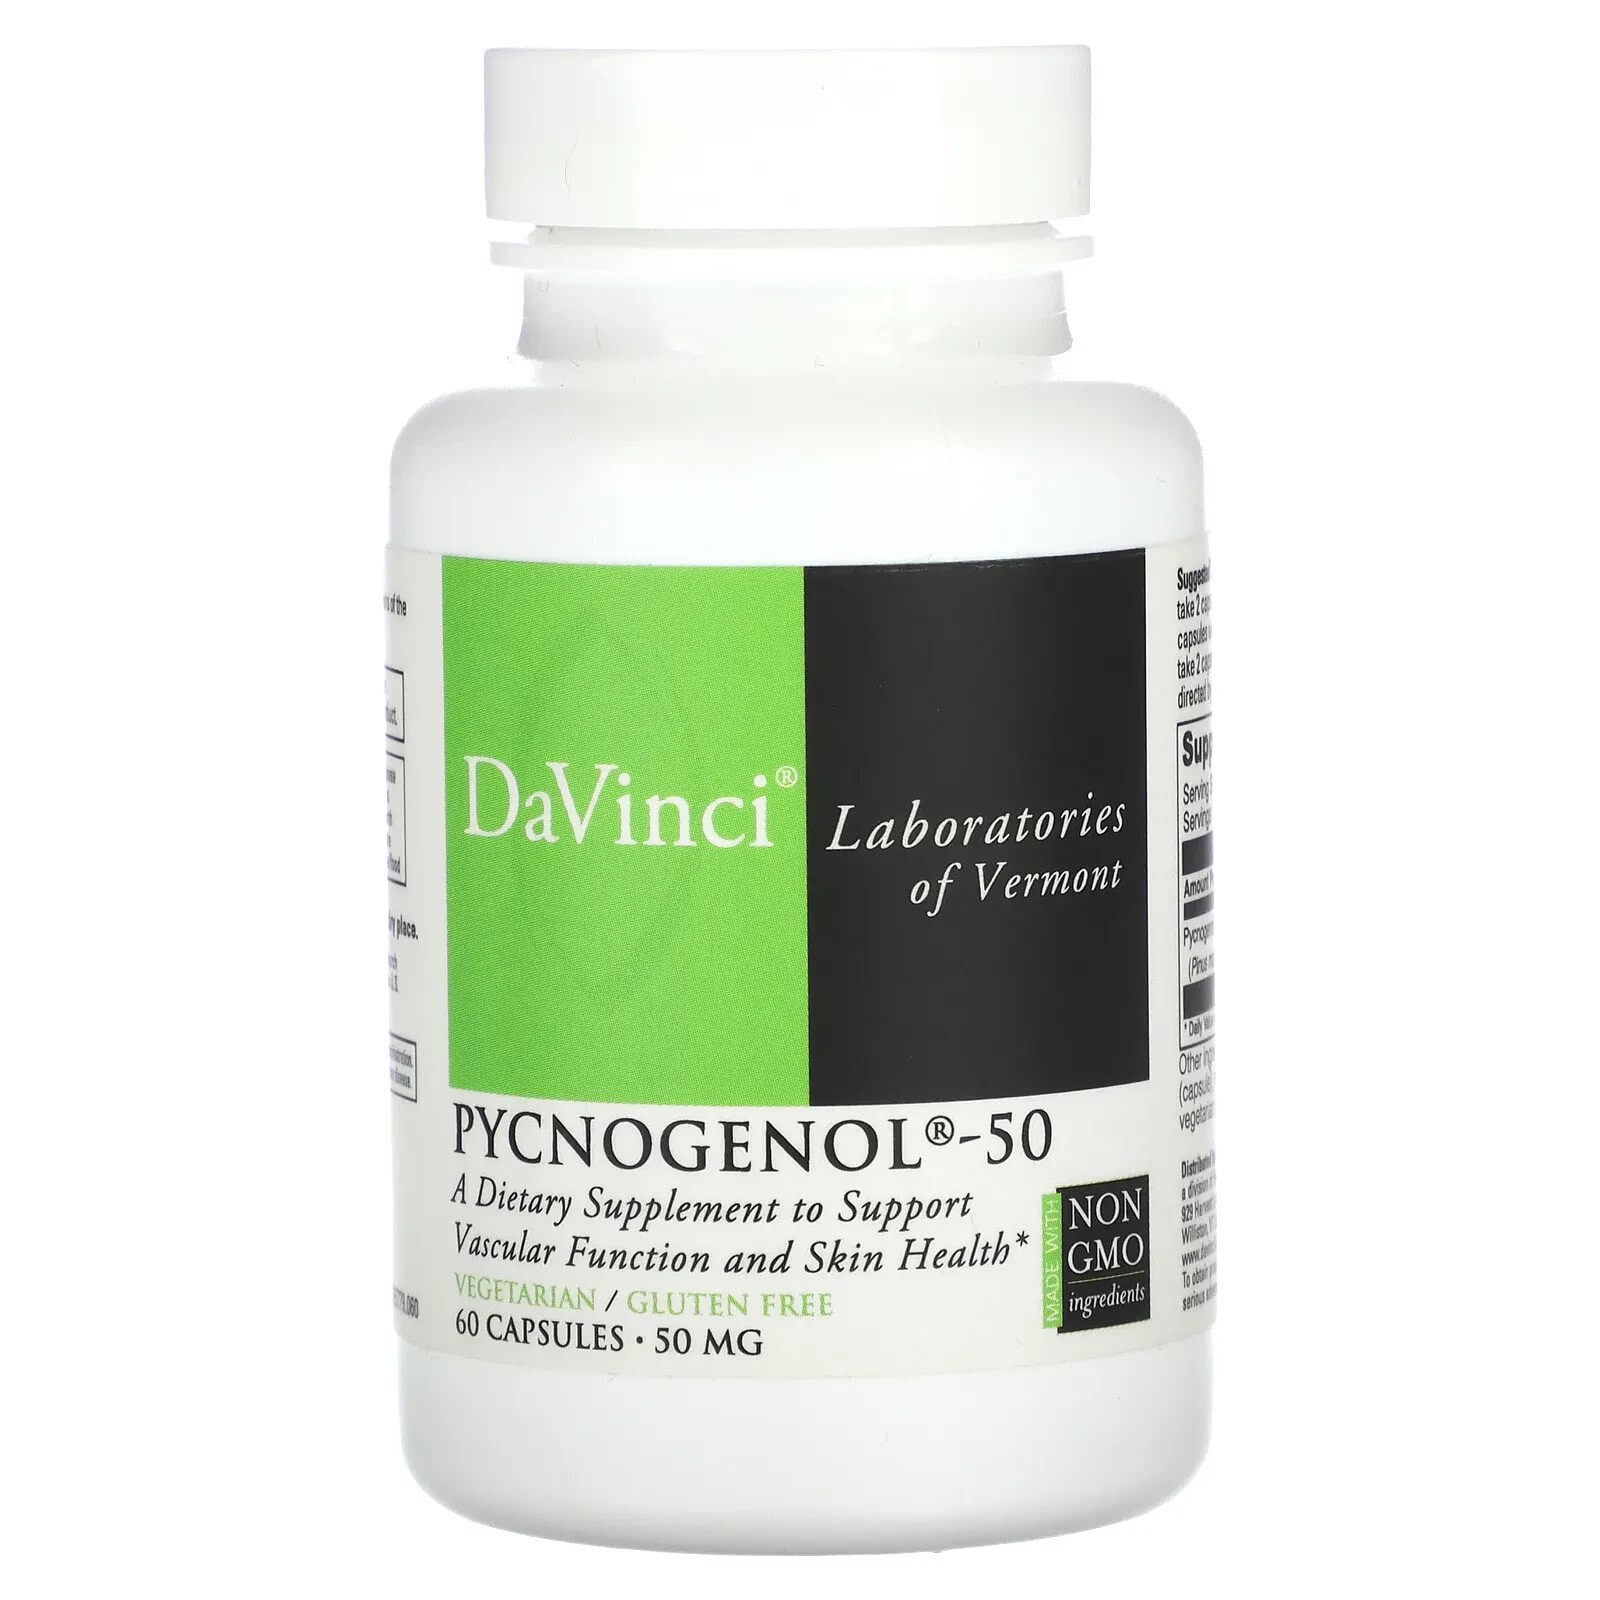 DaVinci Laboratories of Vermont, Pycnogenol-50, 50 mg, 30 Capsules